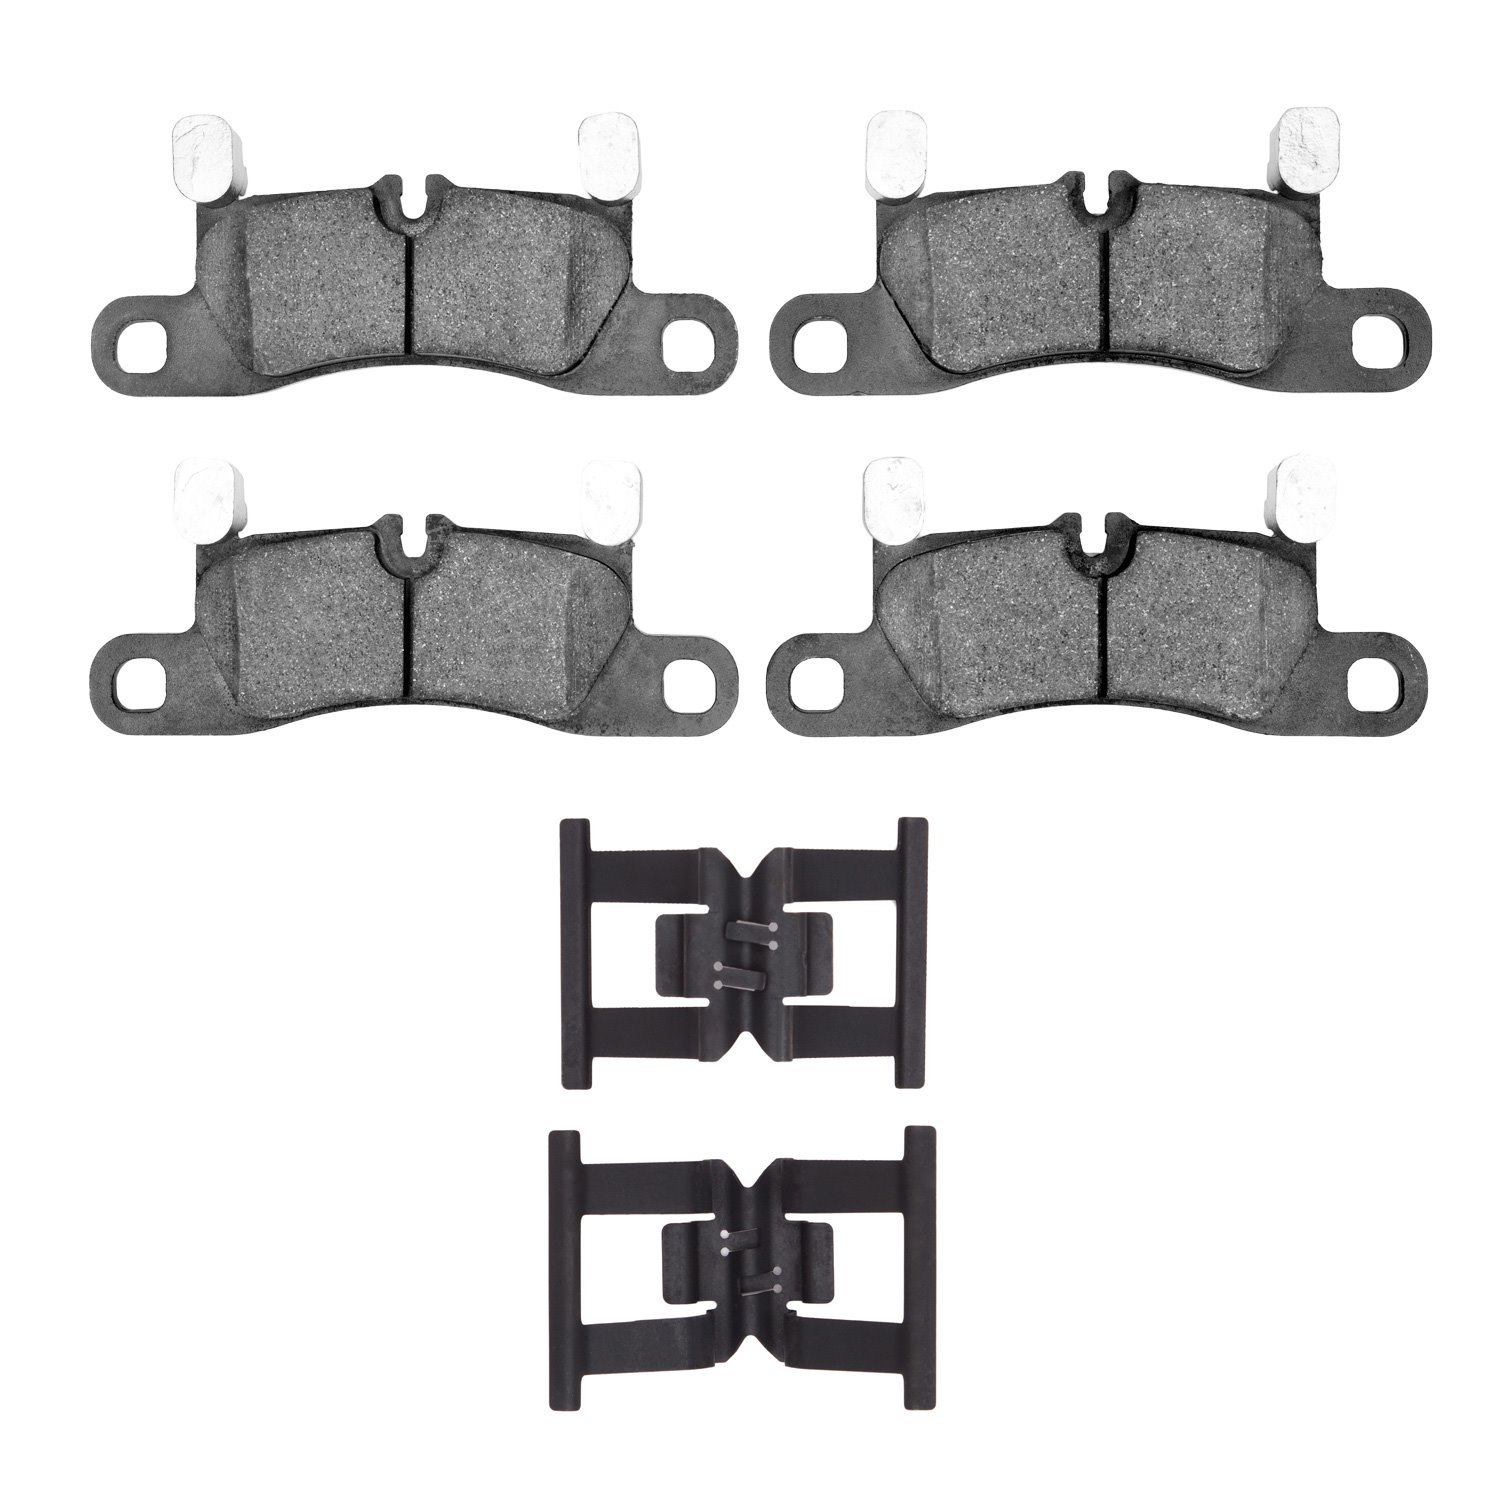 1600-1453-01 5000 Euro Ceramic Brake Pads & Hardware Kit, 2011-2018 Multiple Makes/Models, Position: Rear